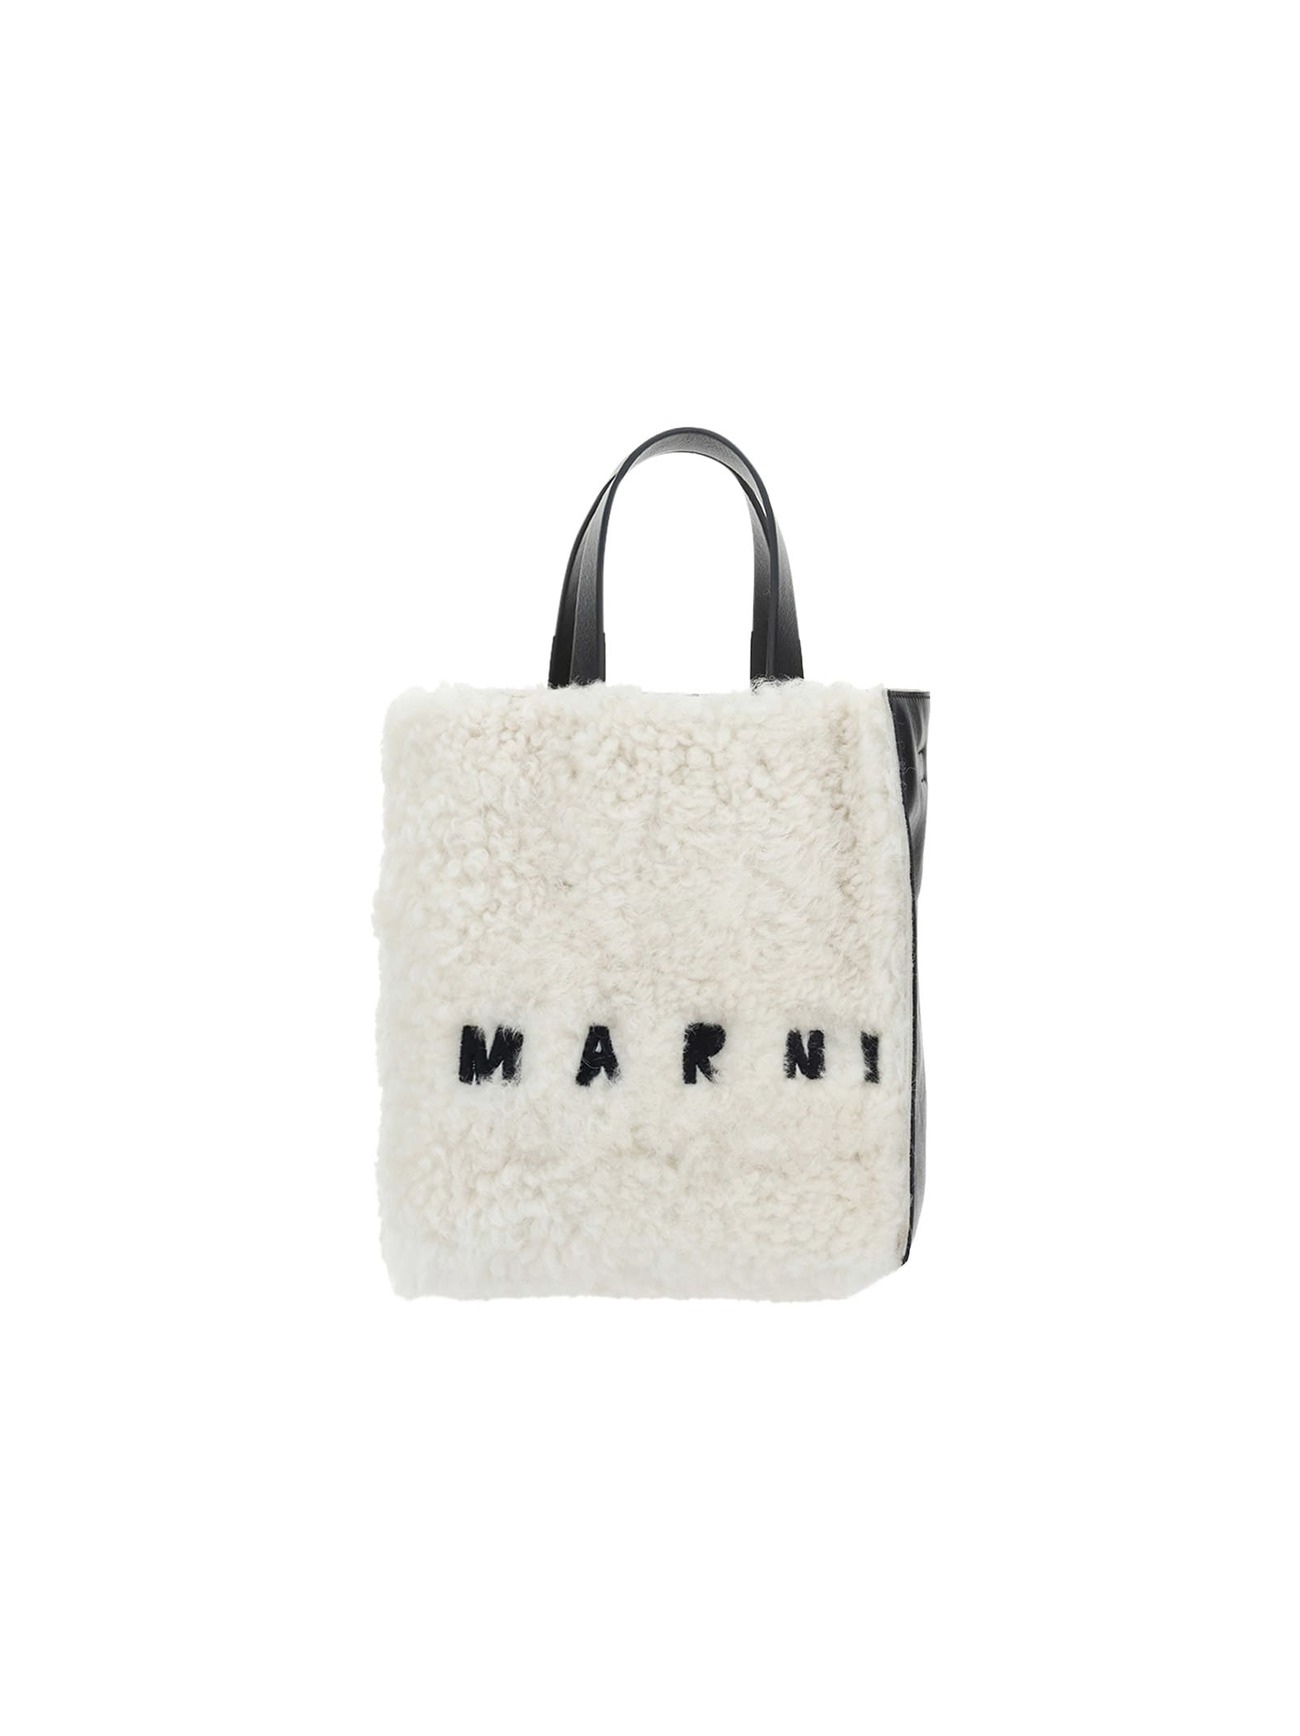 Marni Shopping Bag in black / white